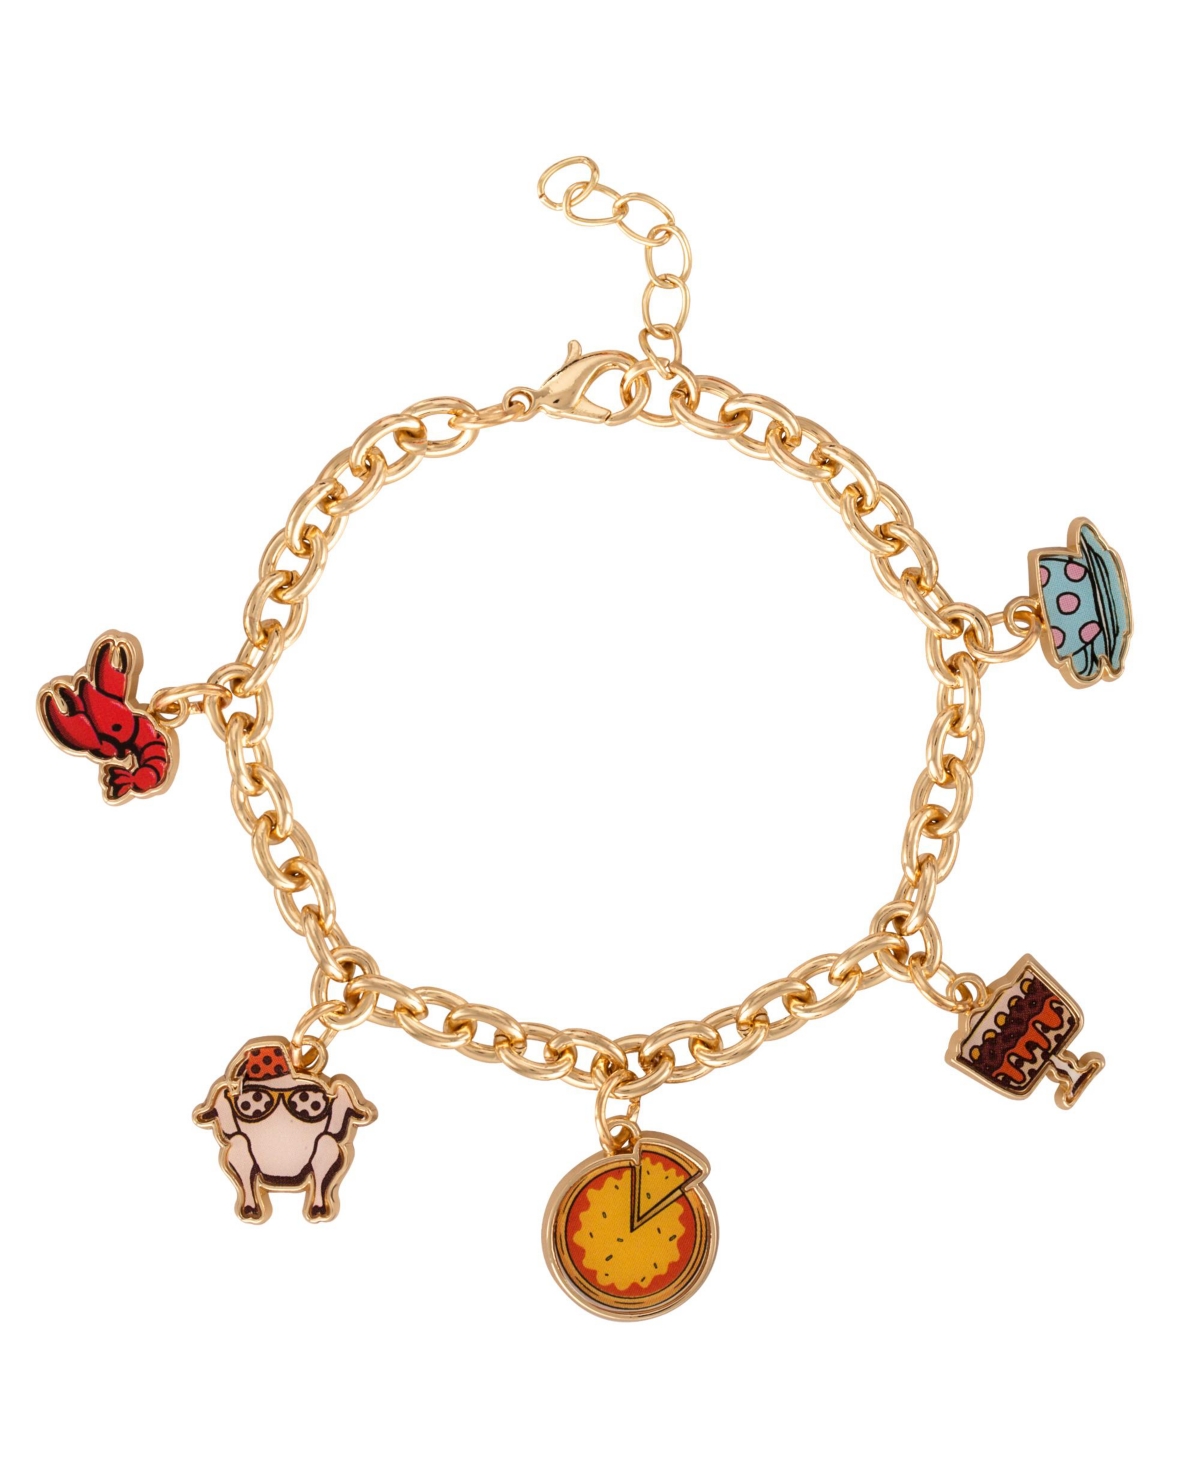 Tv Show Fashion Charm Bracelet, 5 Charms - 7 + 1" - Gold tone, blue, orange